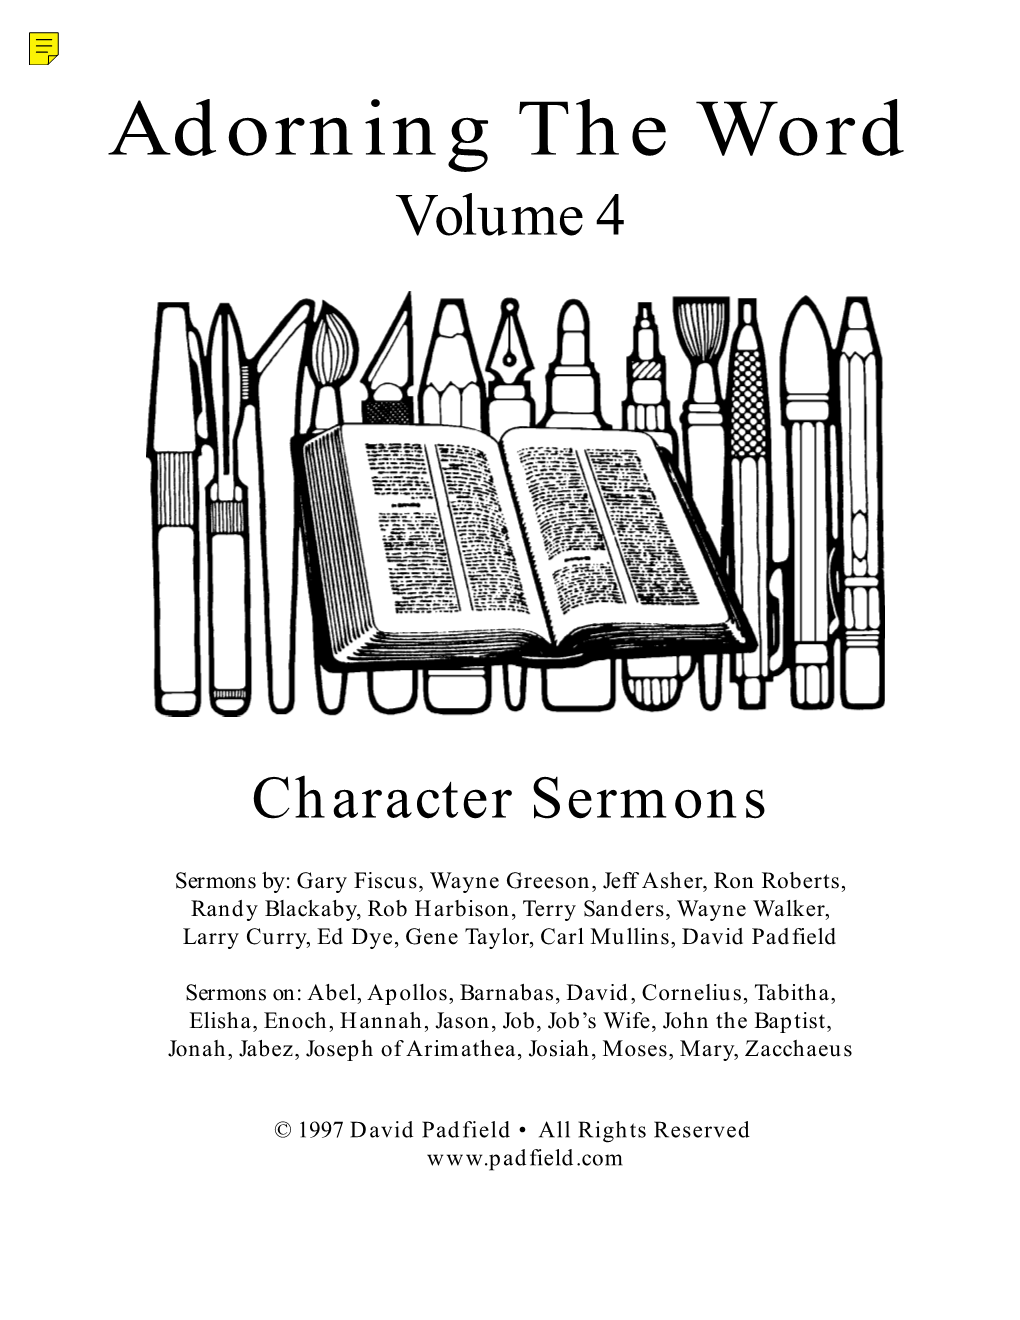 Adorning the Word, Free Sermon Outlines, Volume 4